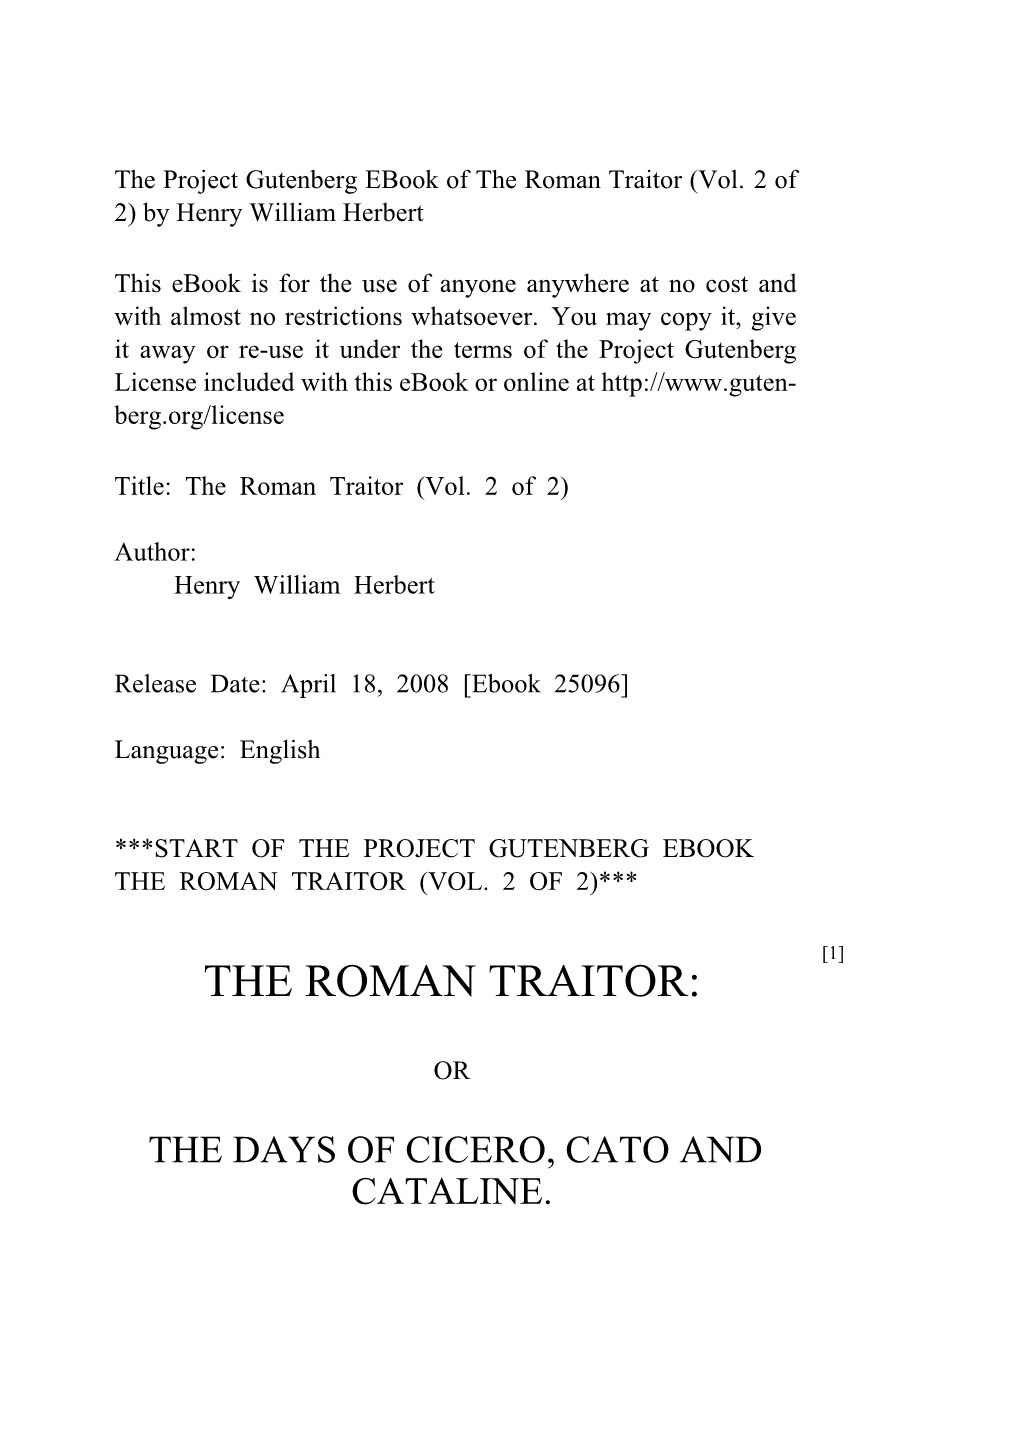 The Roman Traitor (Vol